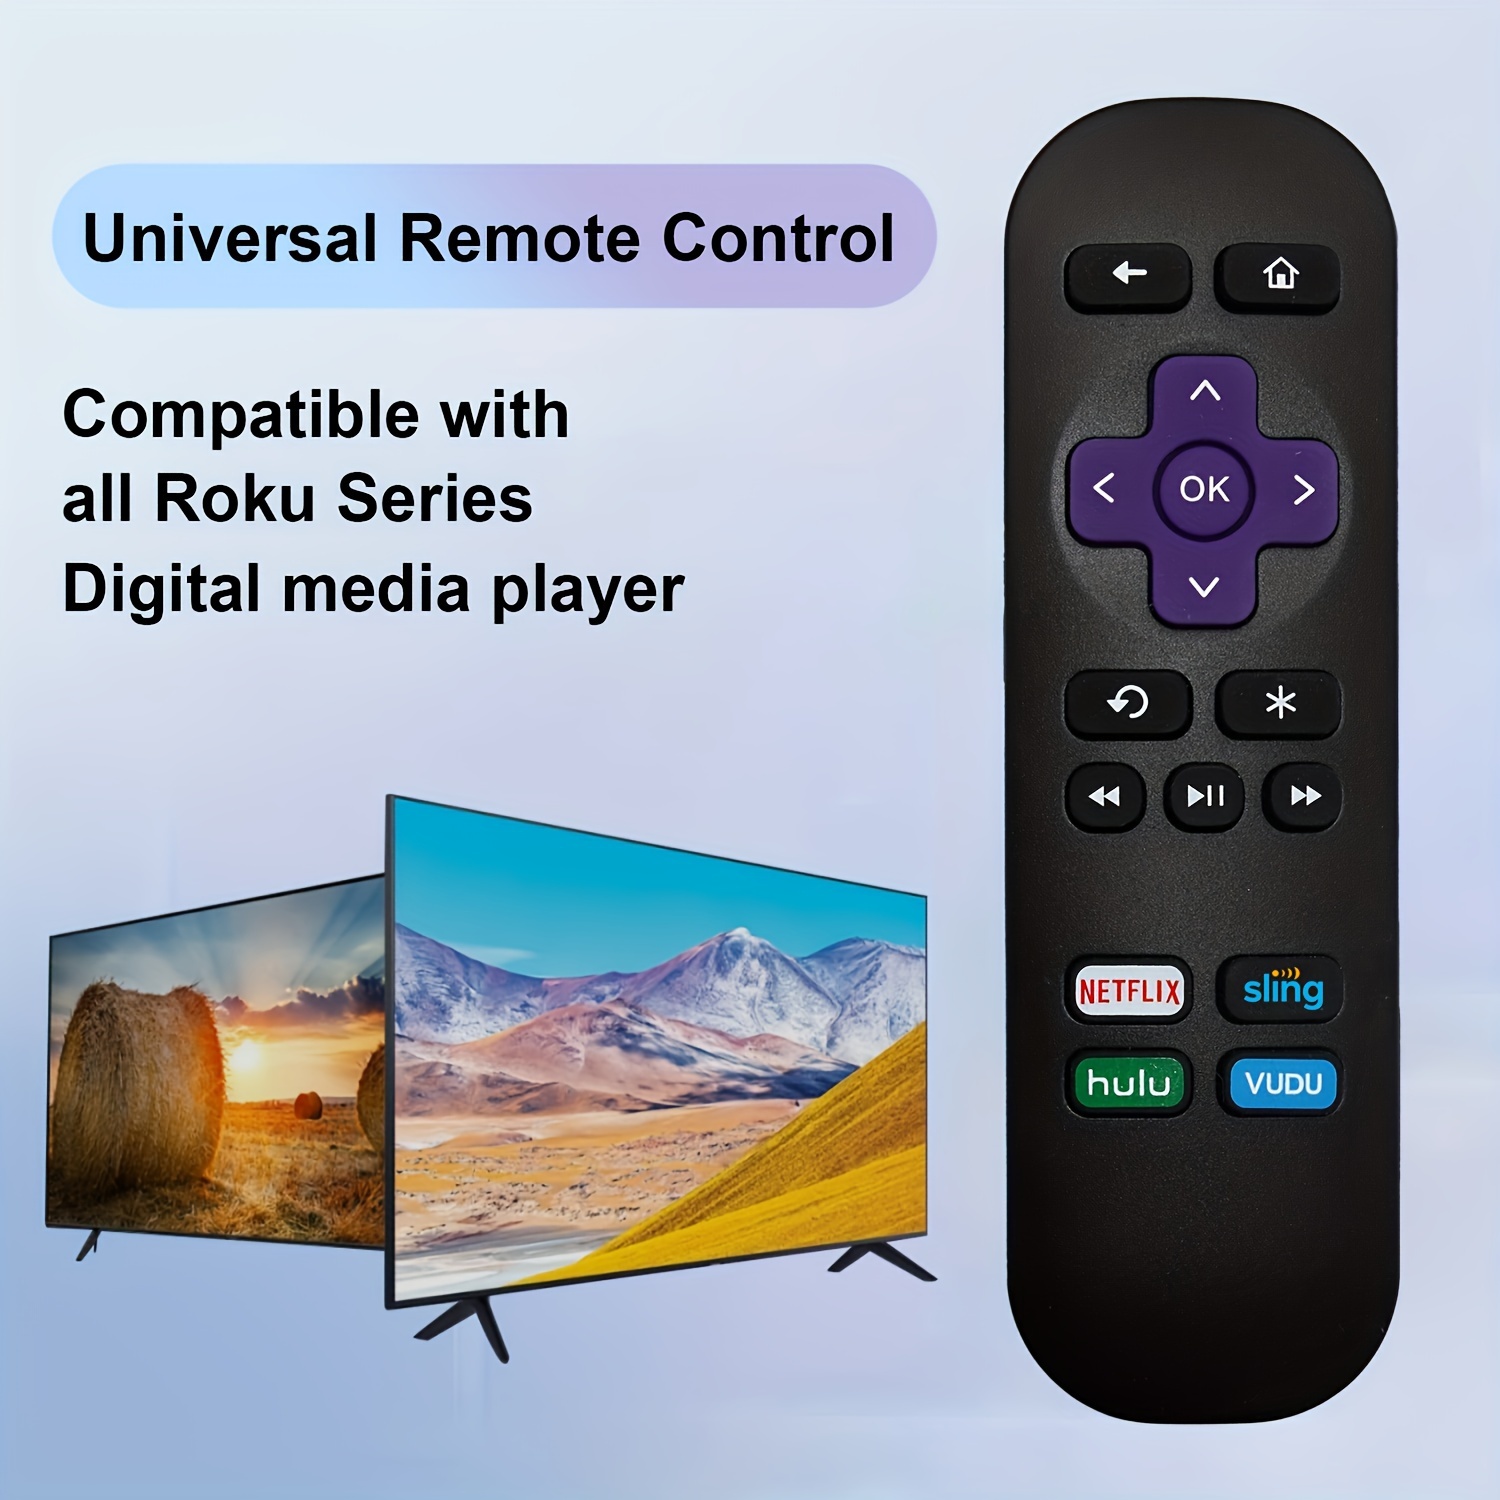 Reproductor Multimedia Roku Premiere HD / 4K / HDR Con Control Remoto